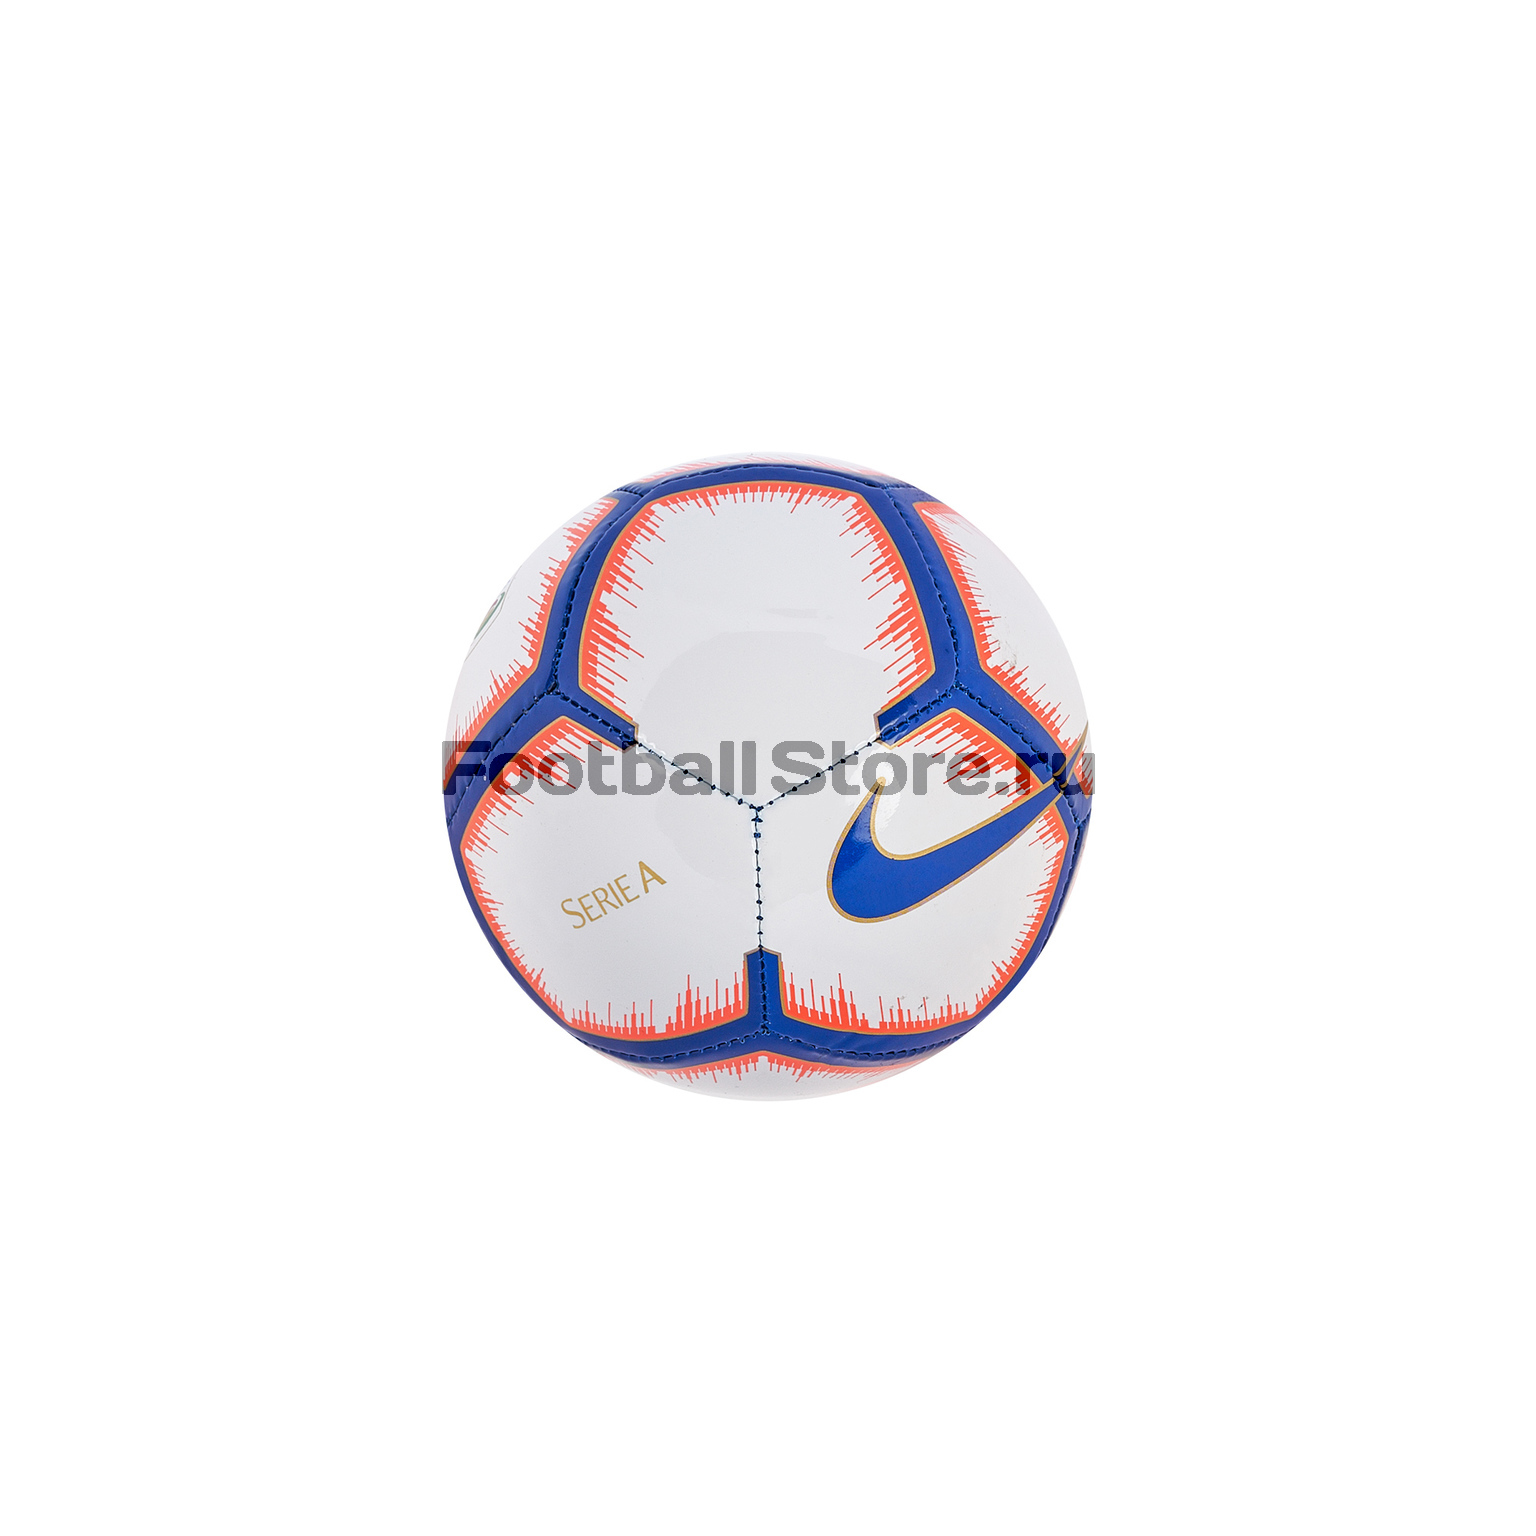 Мяч сувенирный Nike Serie A SC3375-100